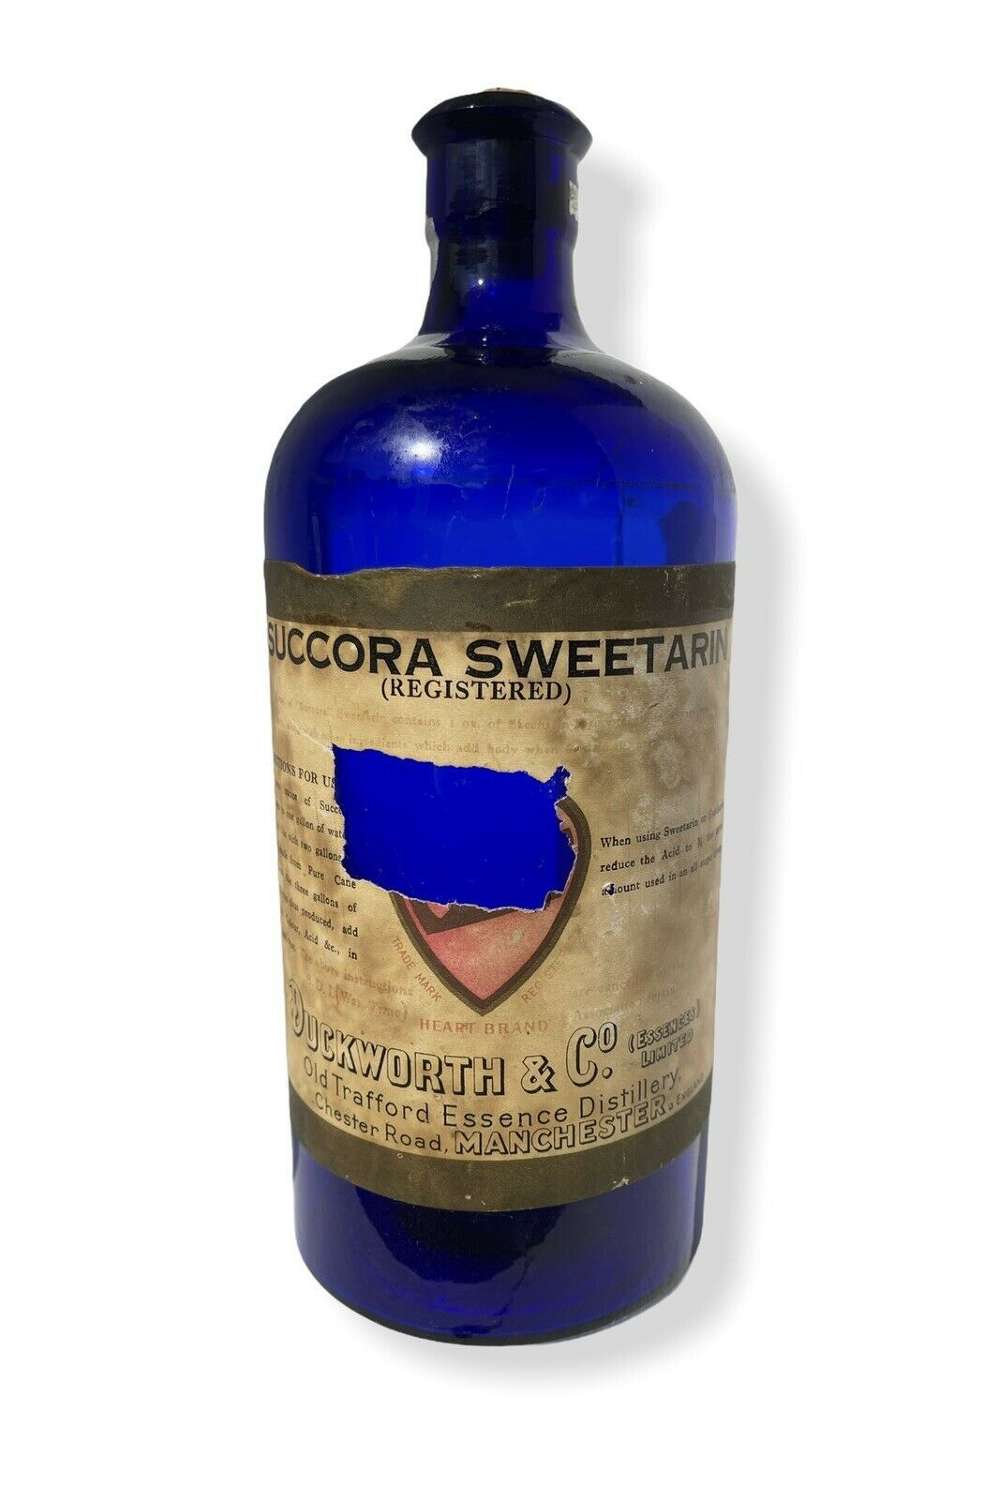 Duckworth & Co Manchester Bottle “ Succora Sweetarin”.